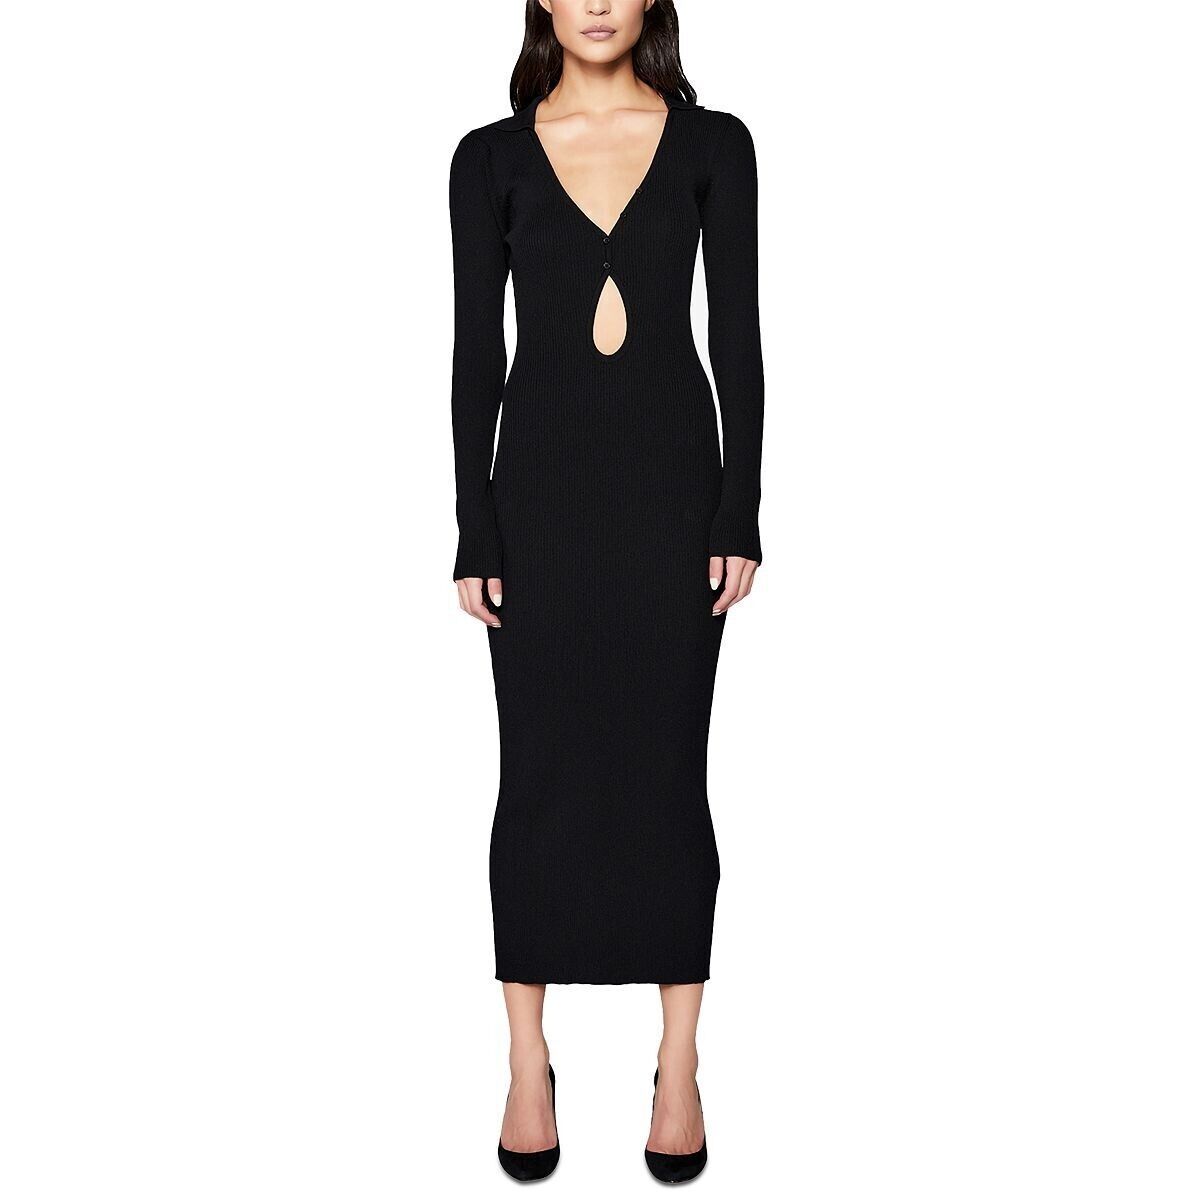 Primary image for Bardot Women's Rosario Rib-Knit Dress Black L B4HP $129